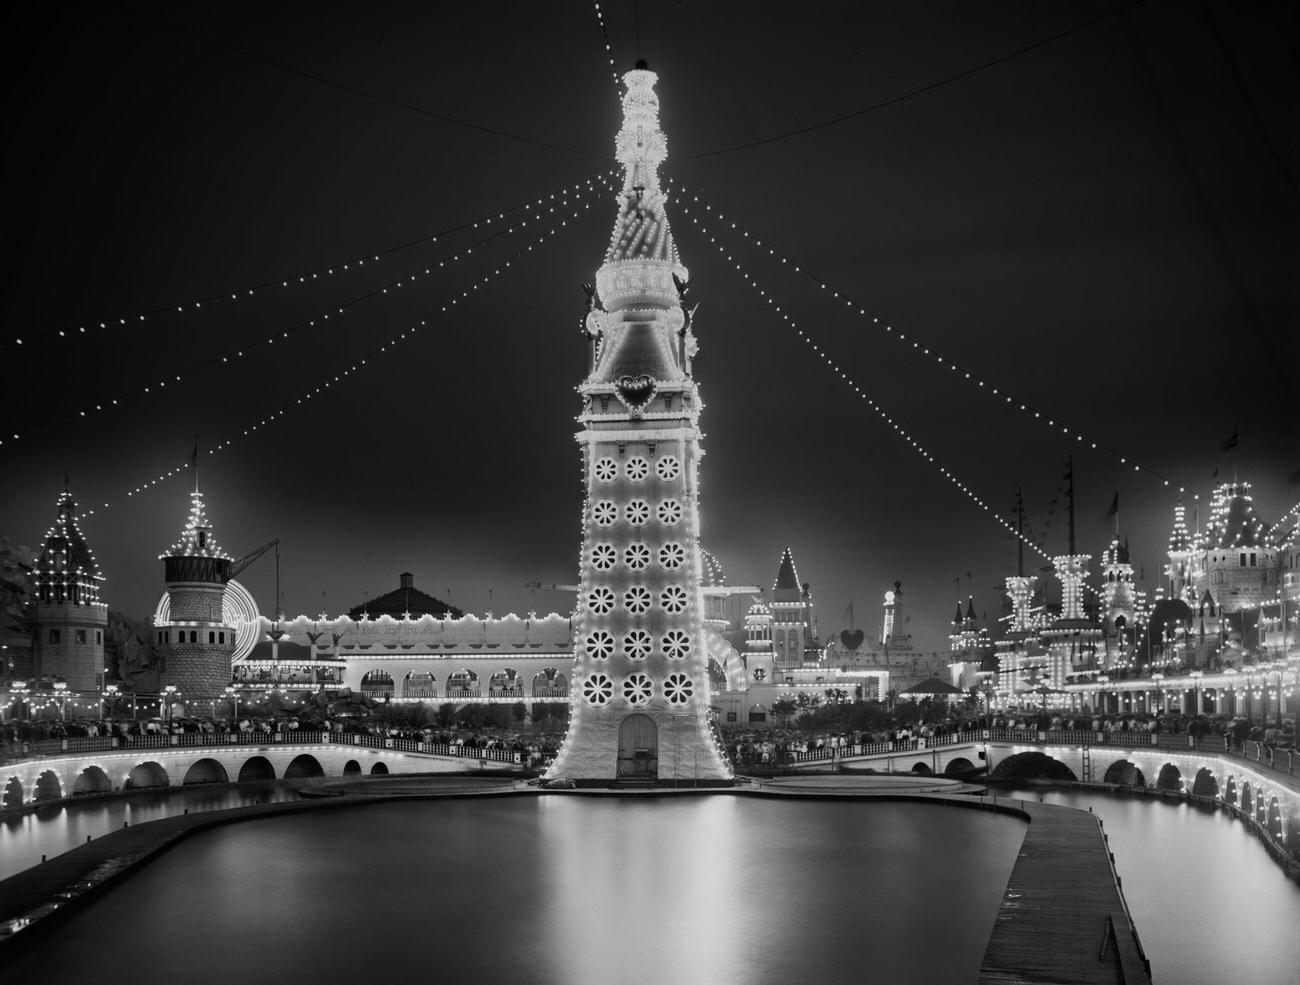 Electric Tower Illuminated At Luna Park, 1903